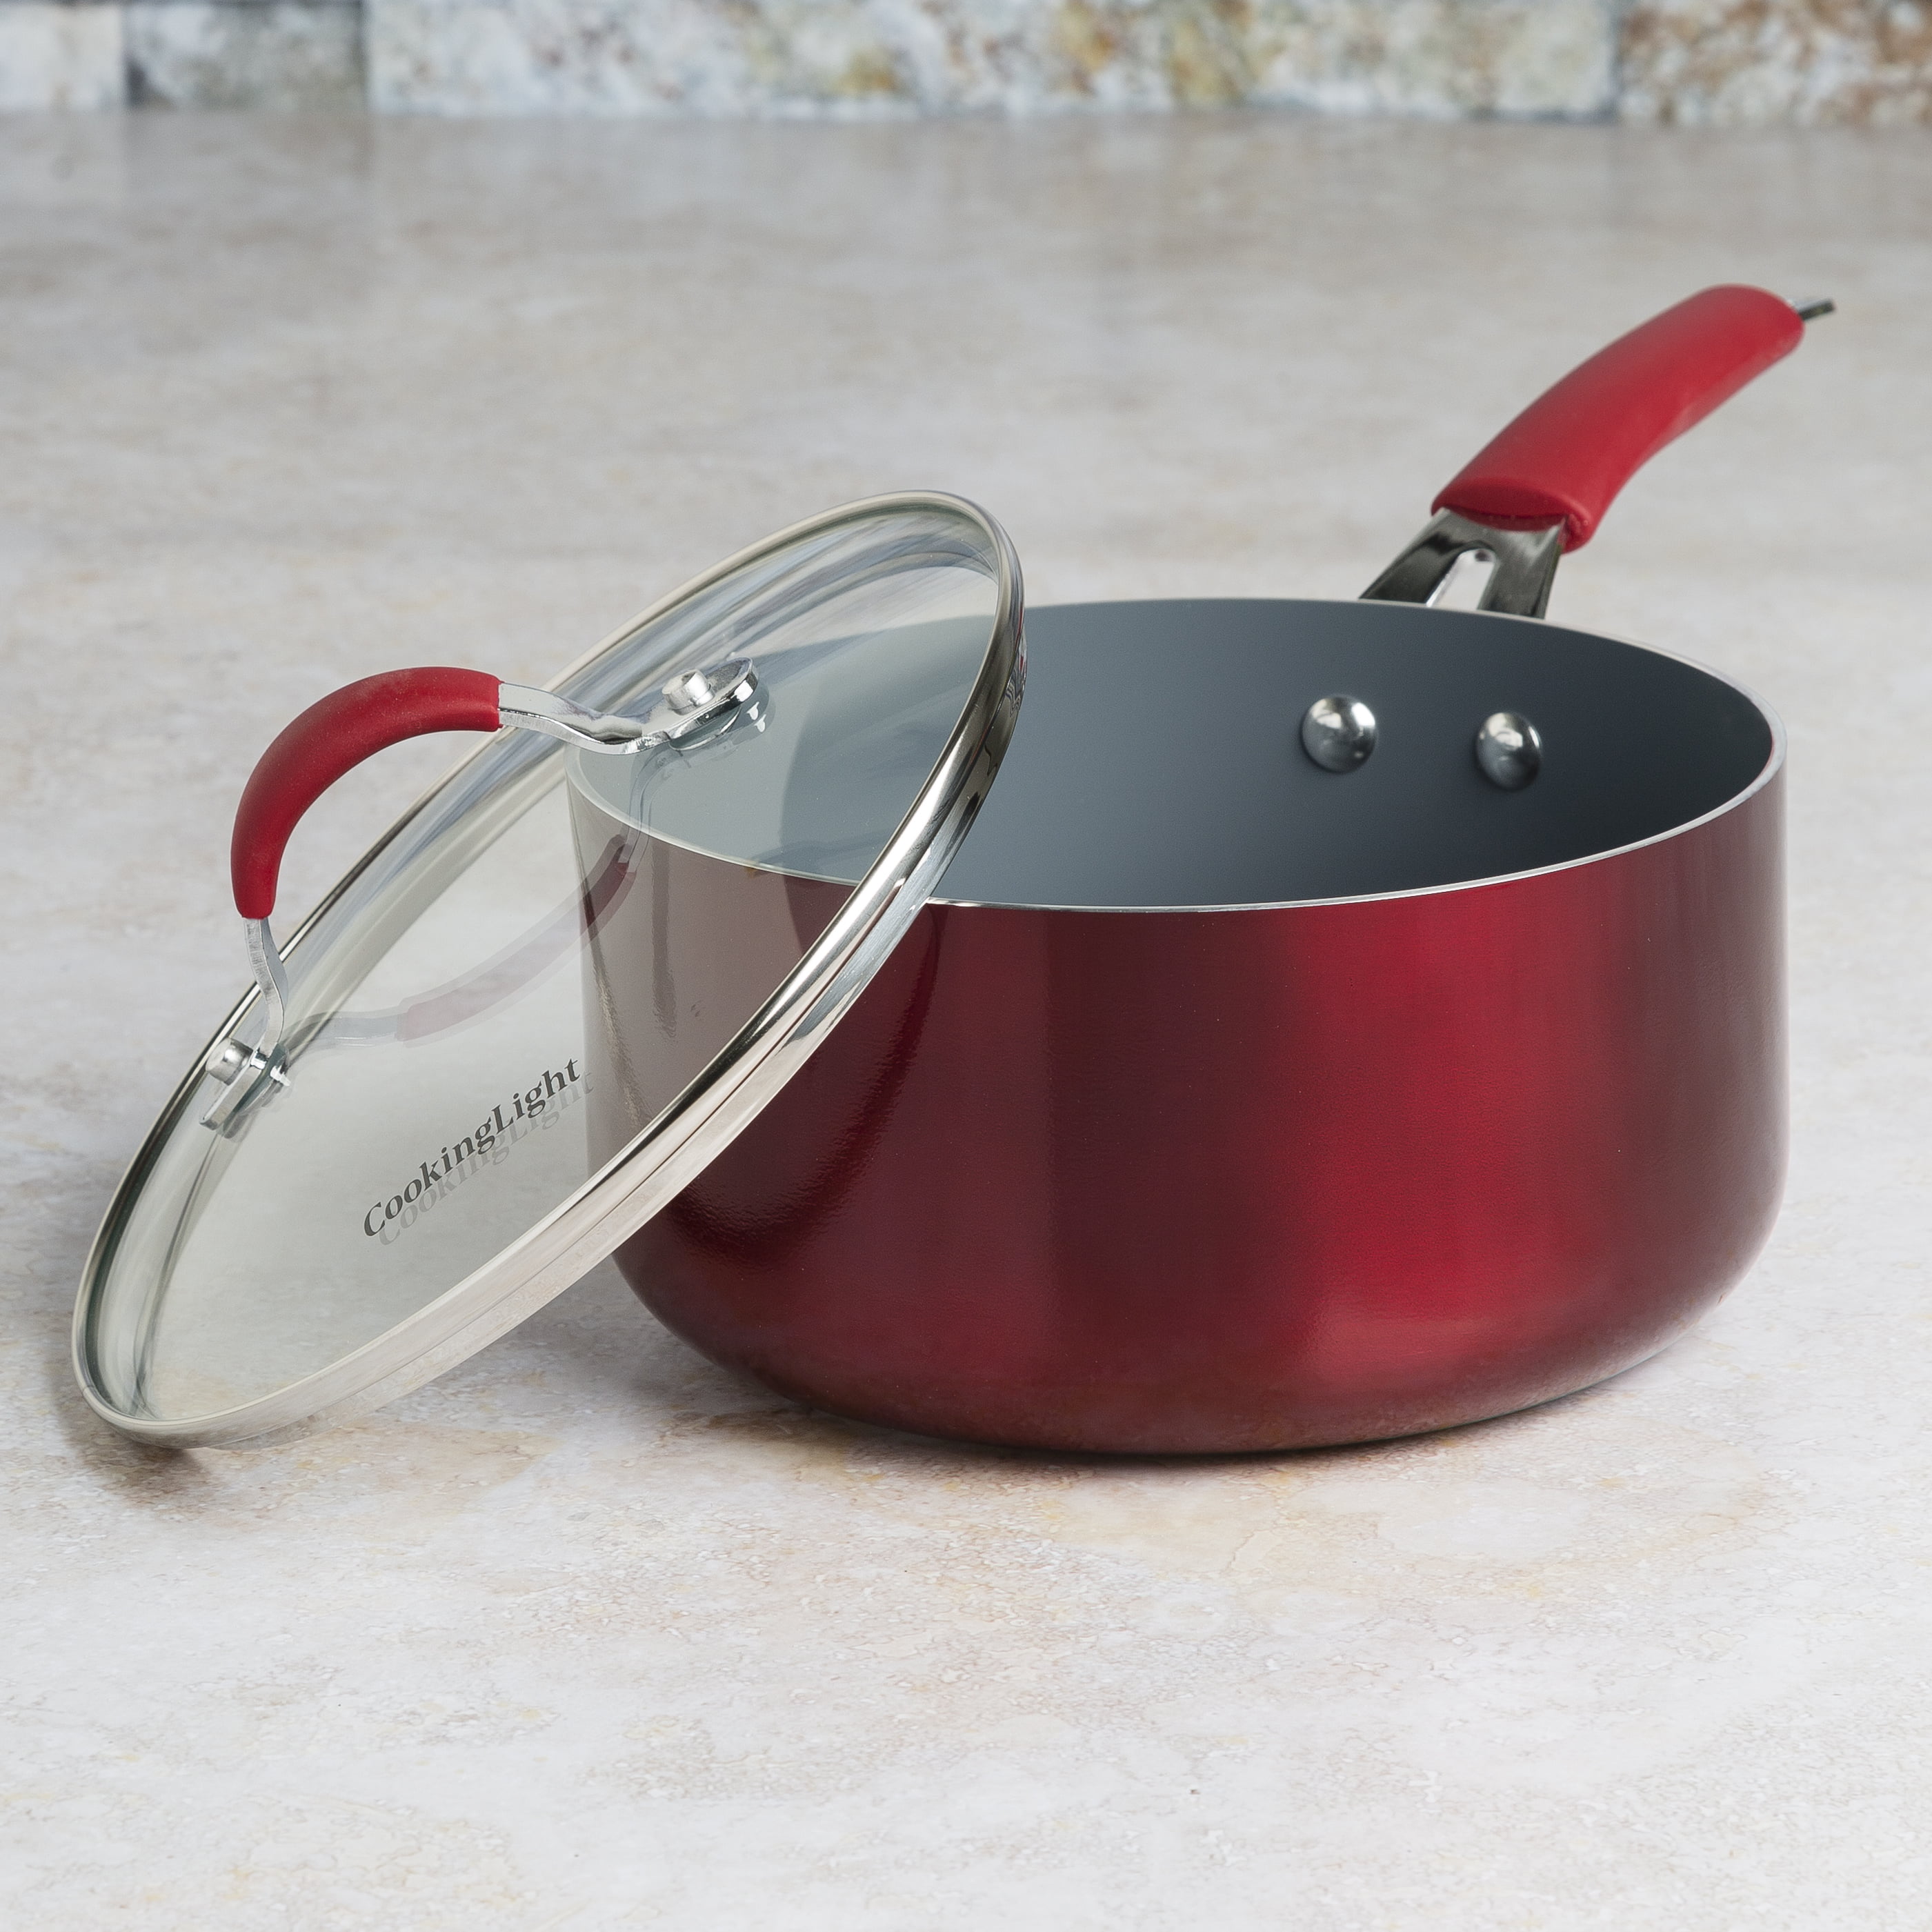 Cooking Light Allure 3 Quart Non-Stick Ceramic Saucepan with Lid, Red 